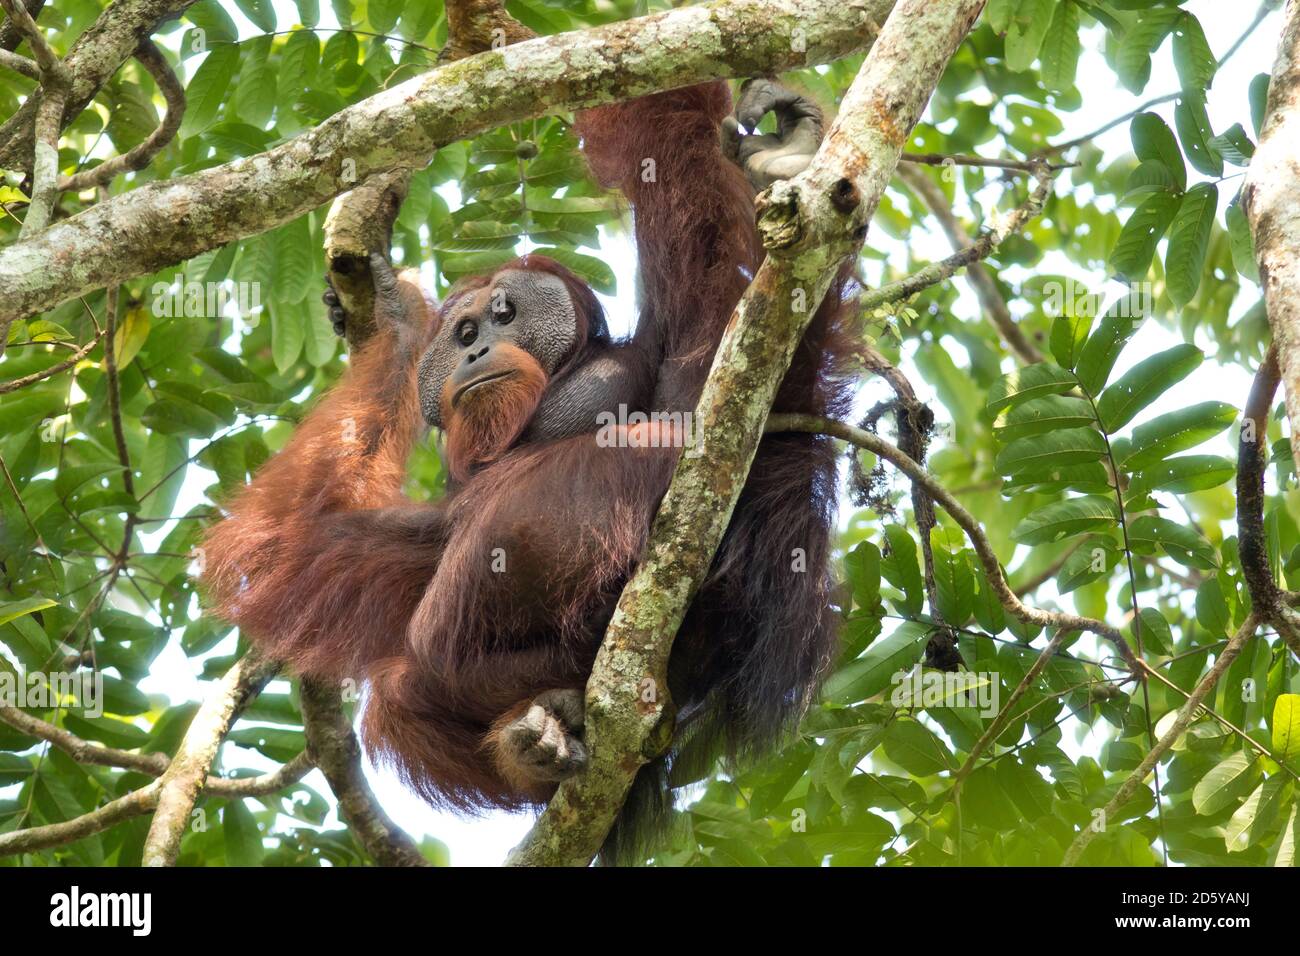 Malaisie, Bornéo, Sabah, Bornean orangutan, Pongo pygmaeus, homme Banque D'Images